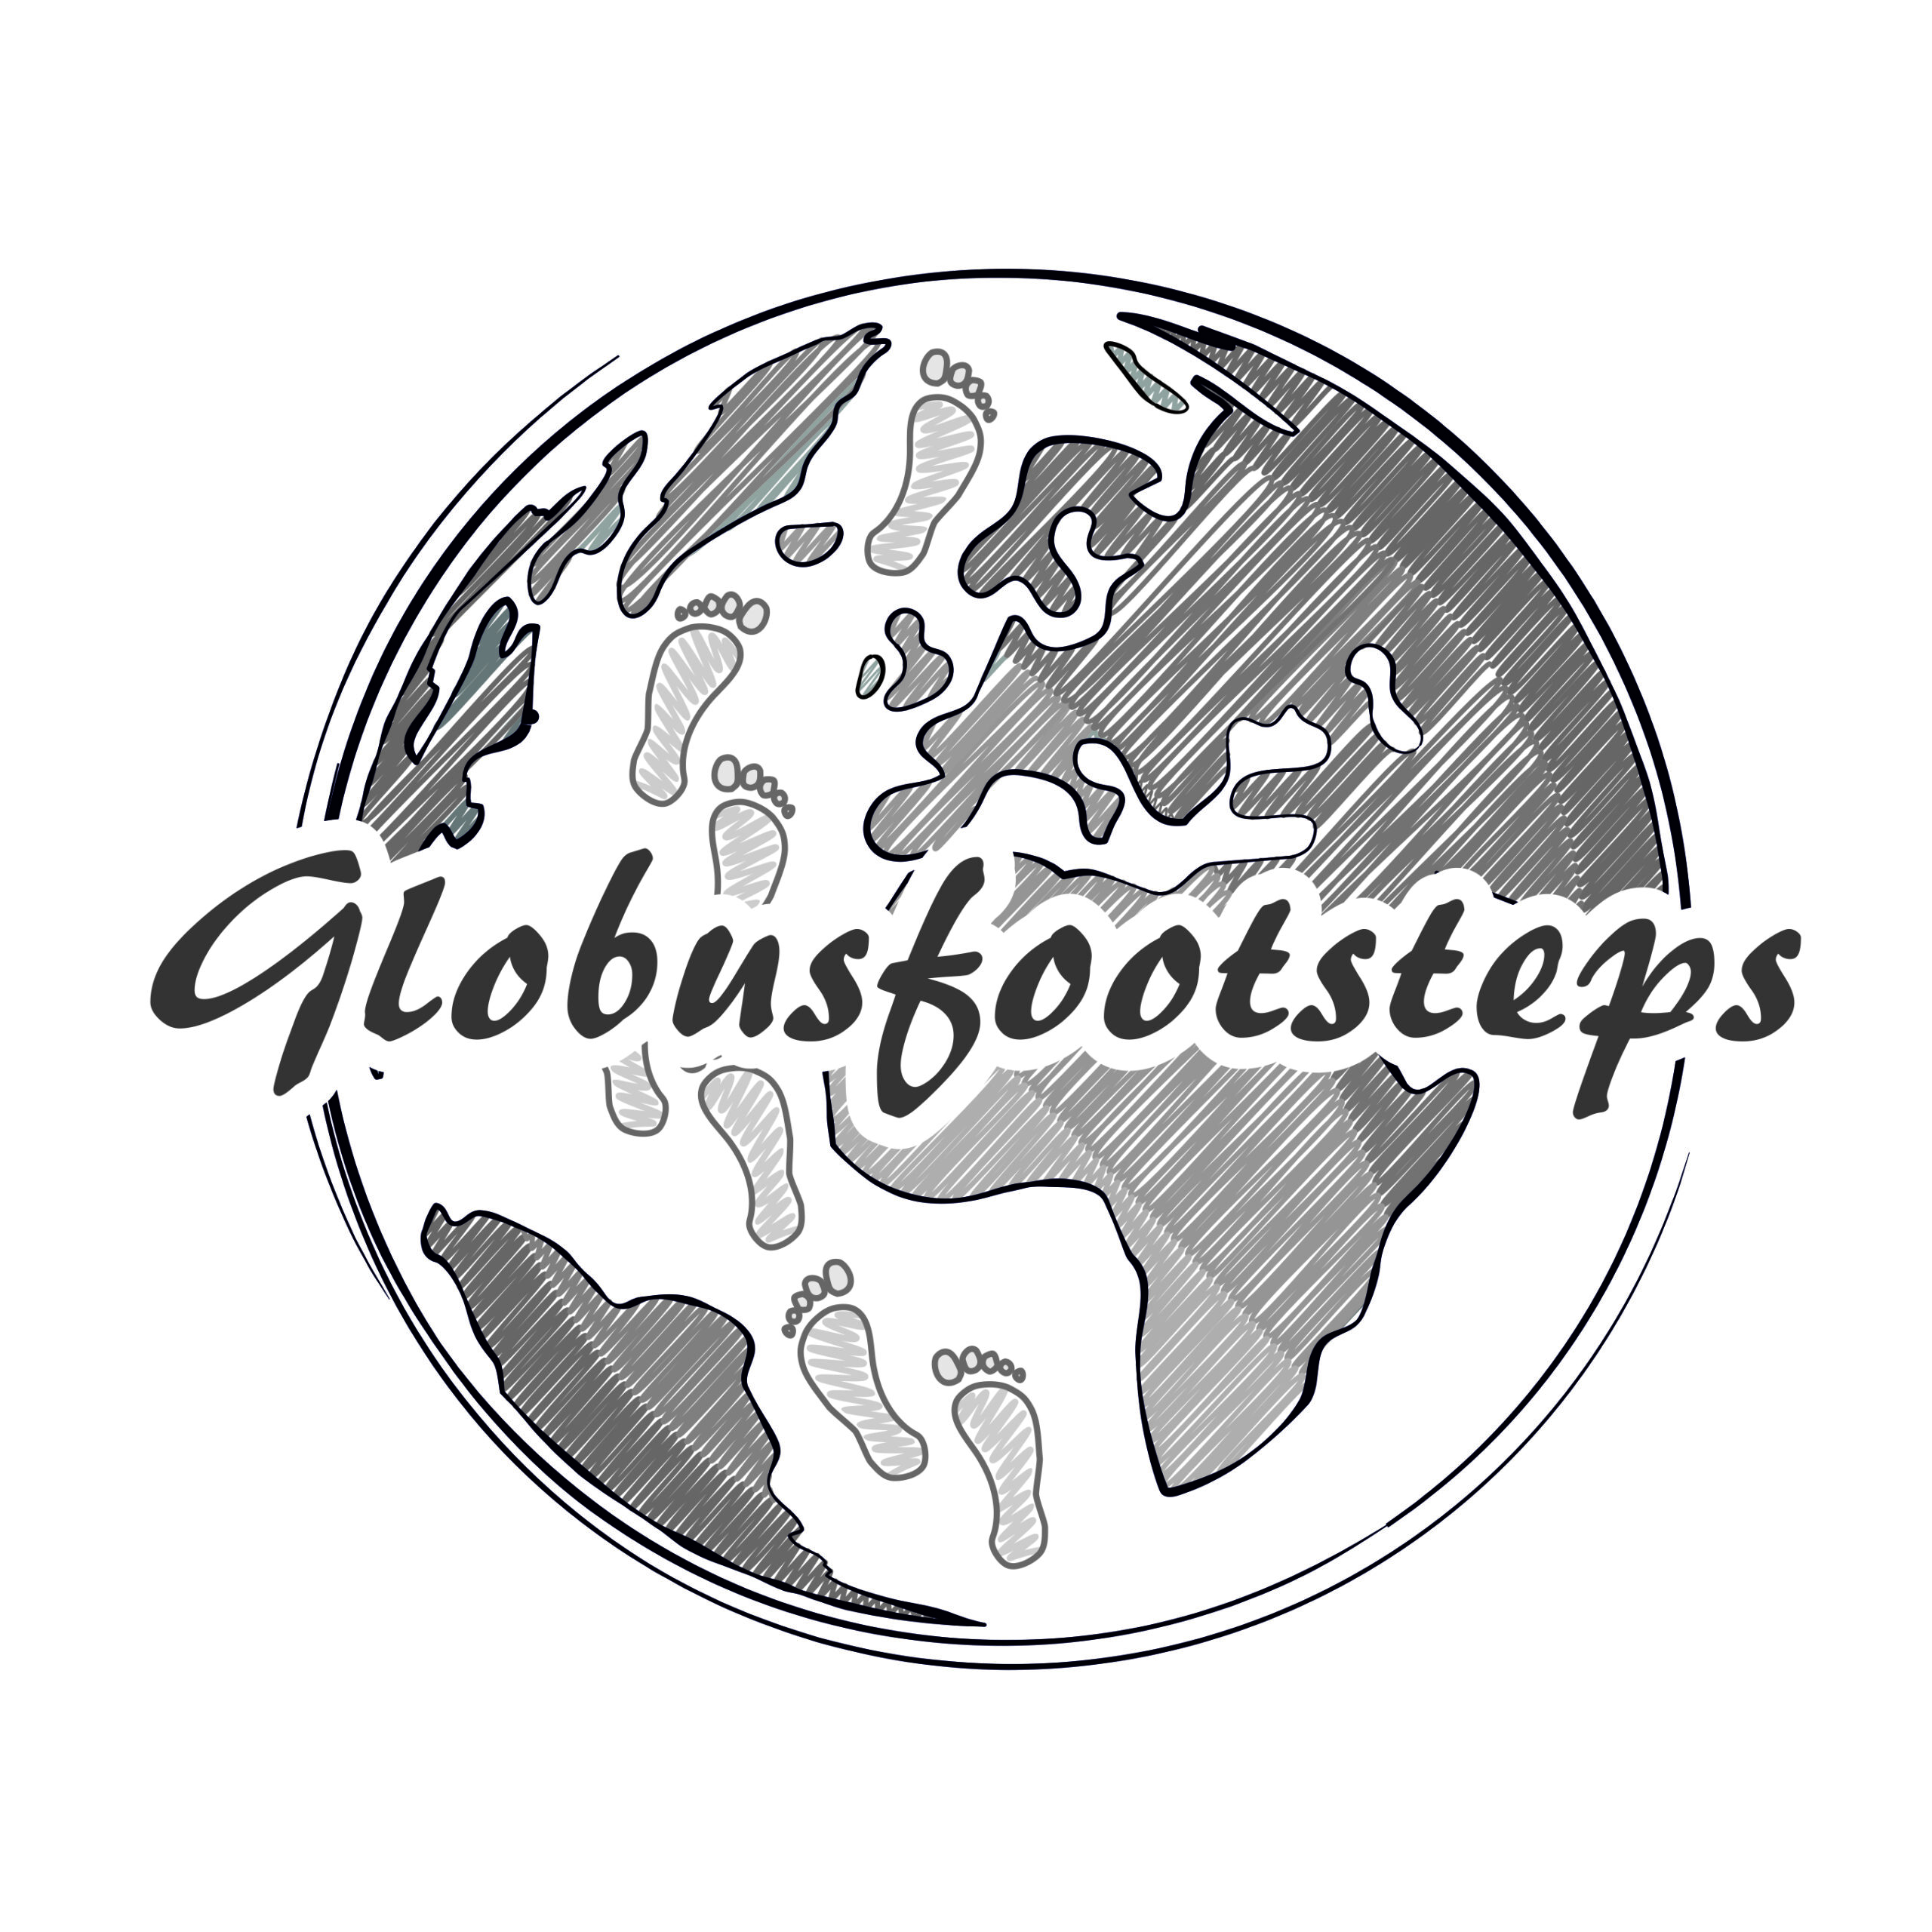 Globusfootsteps